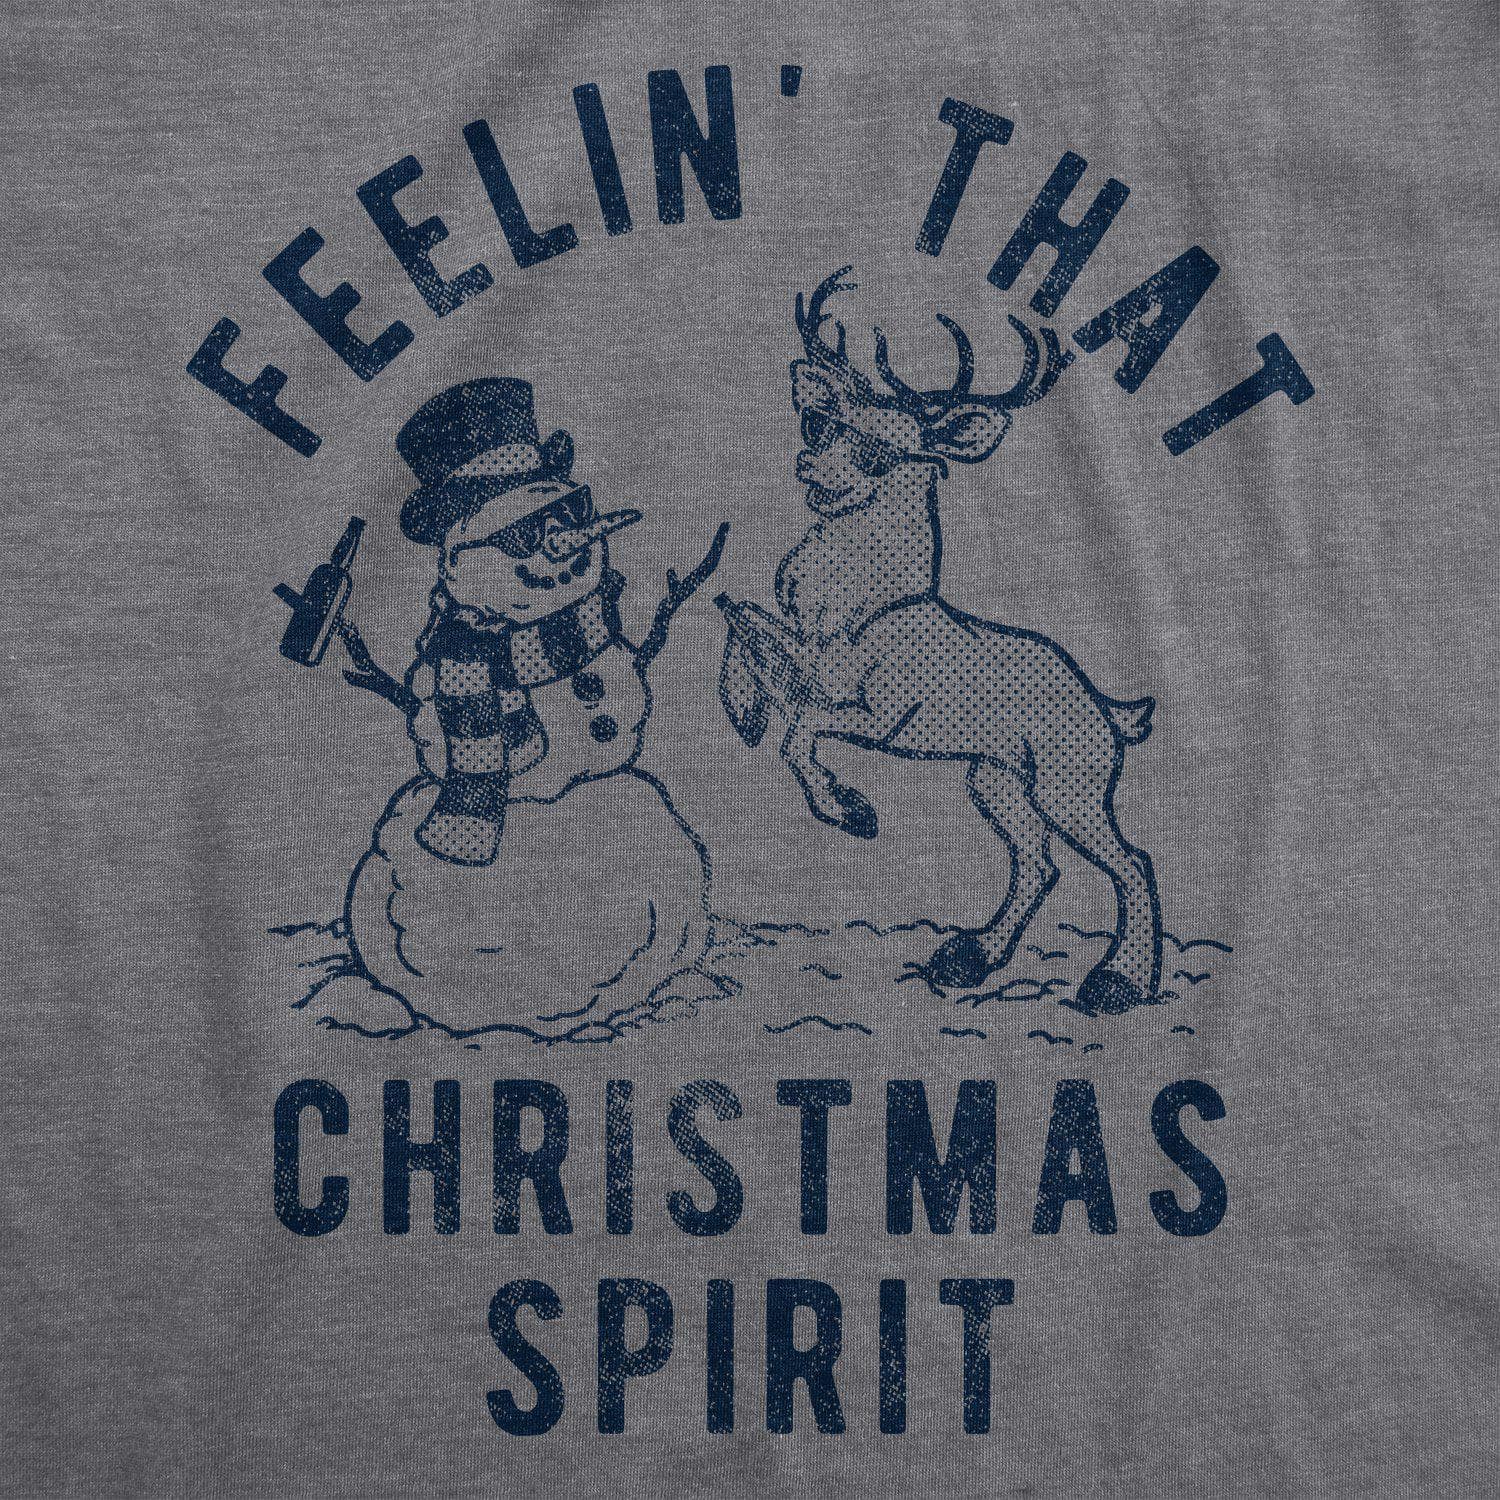 Feelin That Christmas Spirit Men's Tshirt - Crazy Dog T-Shirts